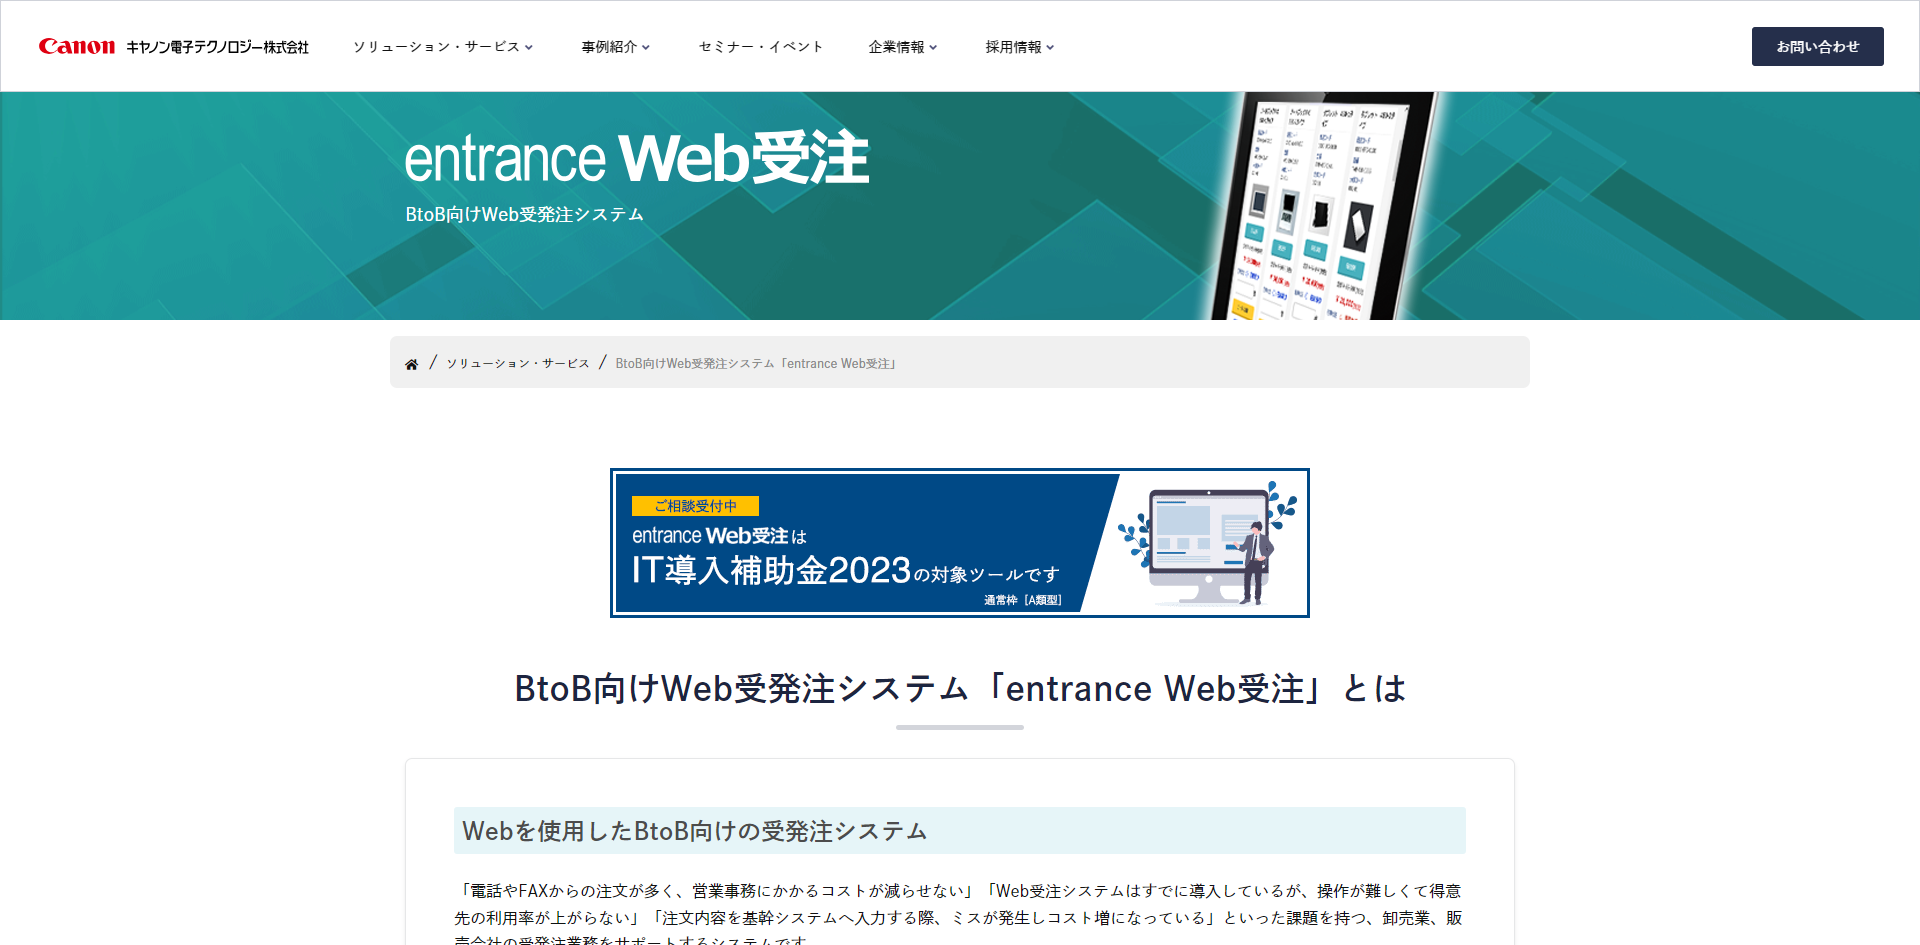 entrance Web受注